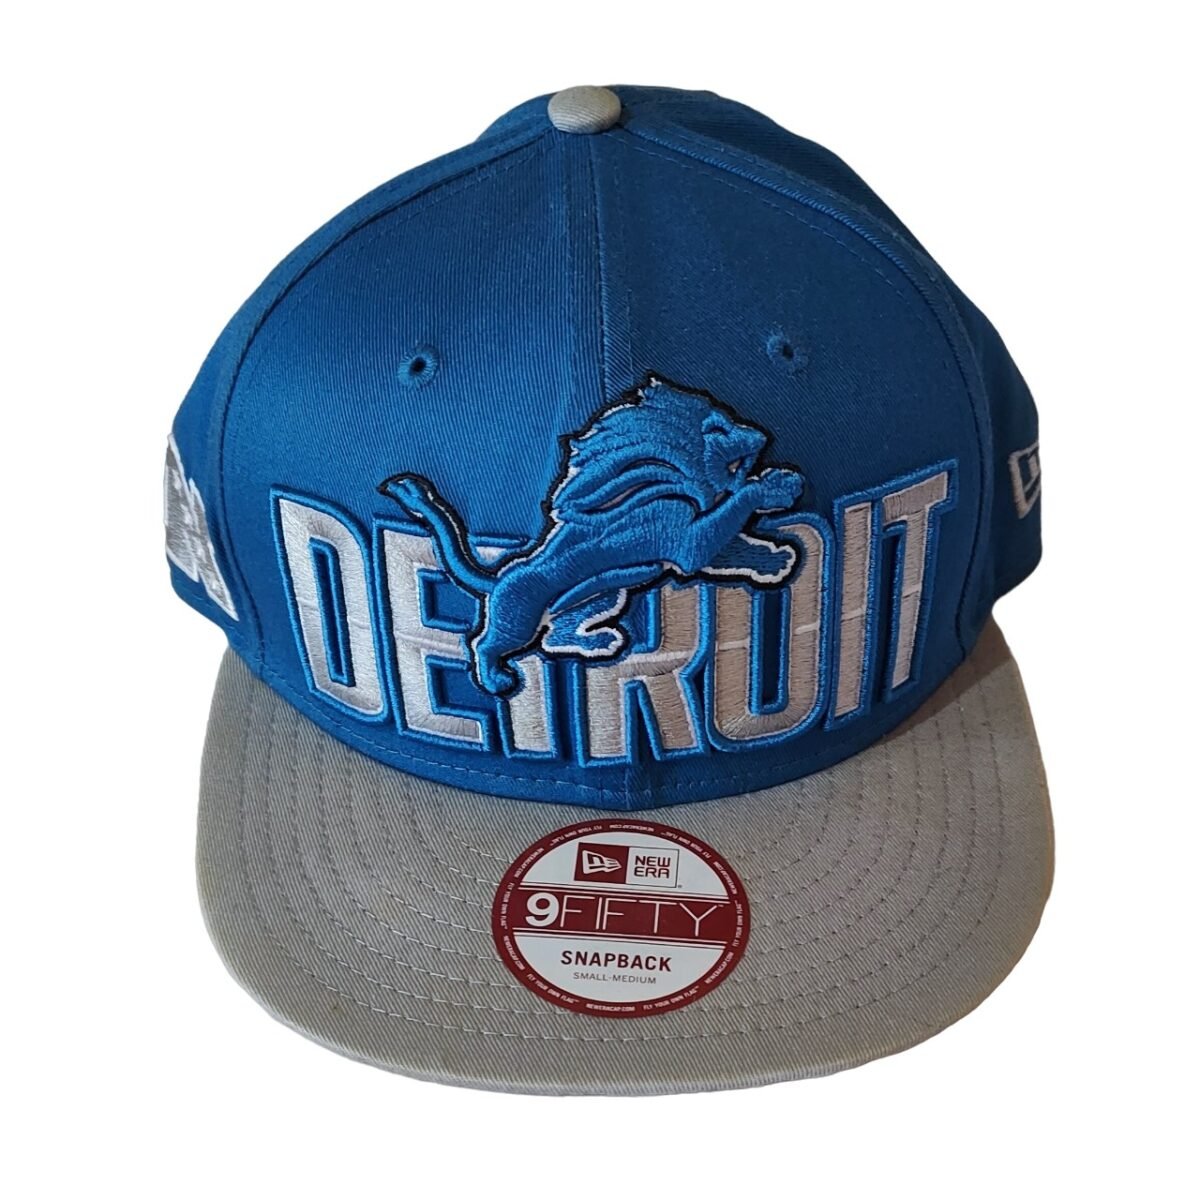 Vintage NFL Snapback Hat Detroit Lions